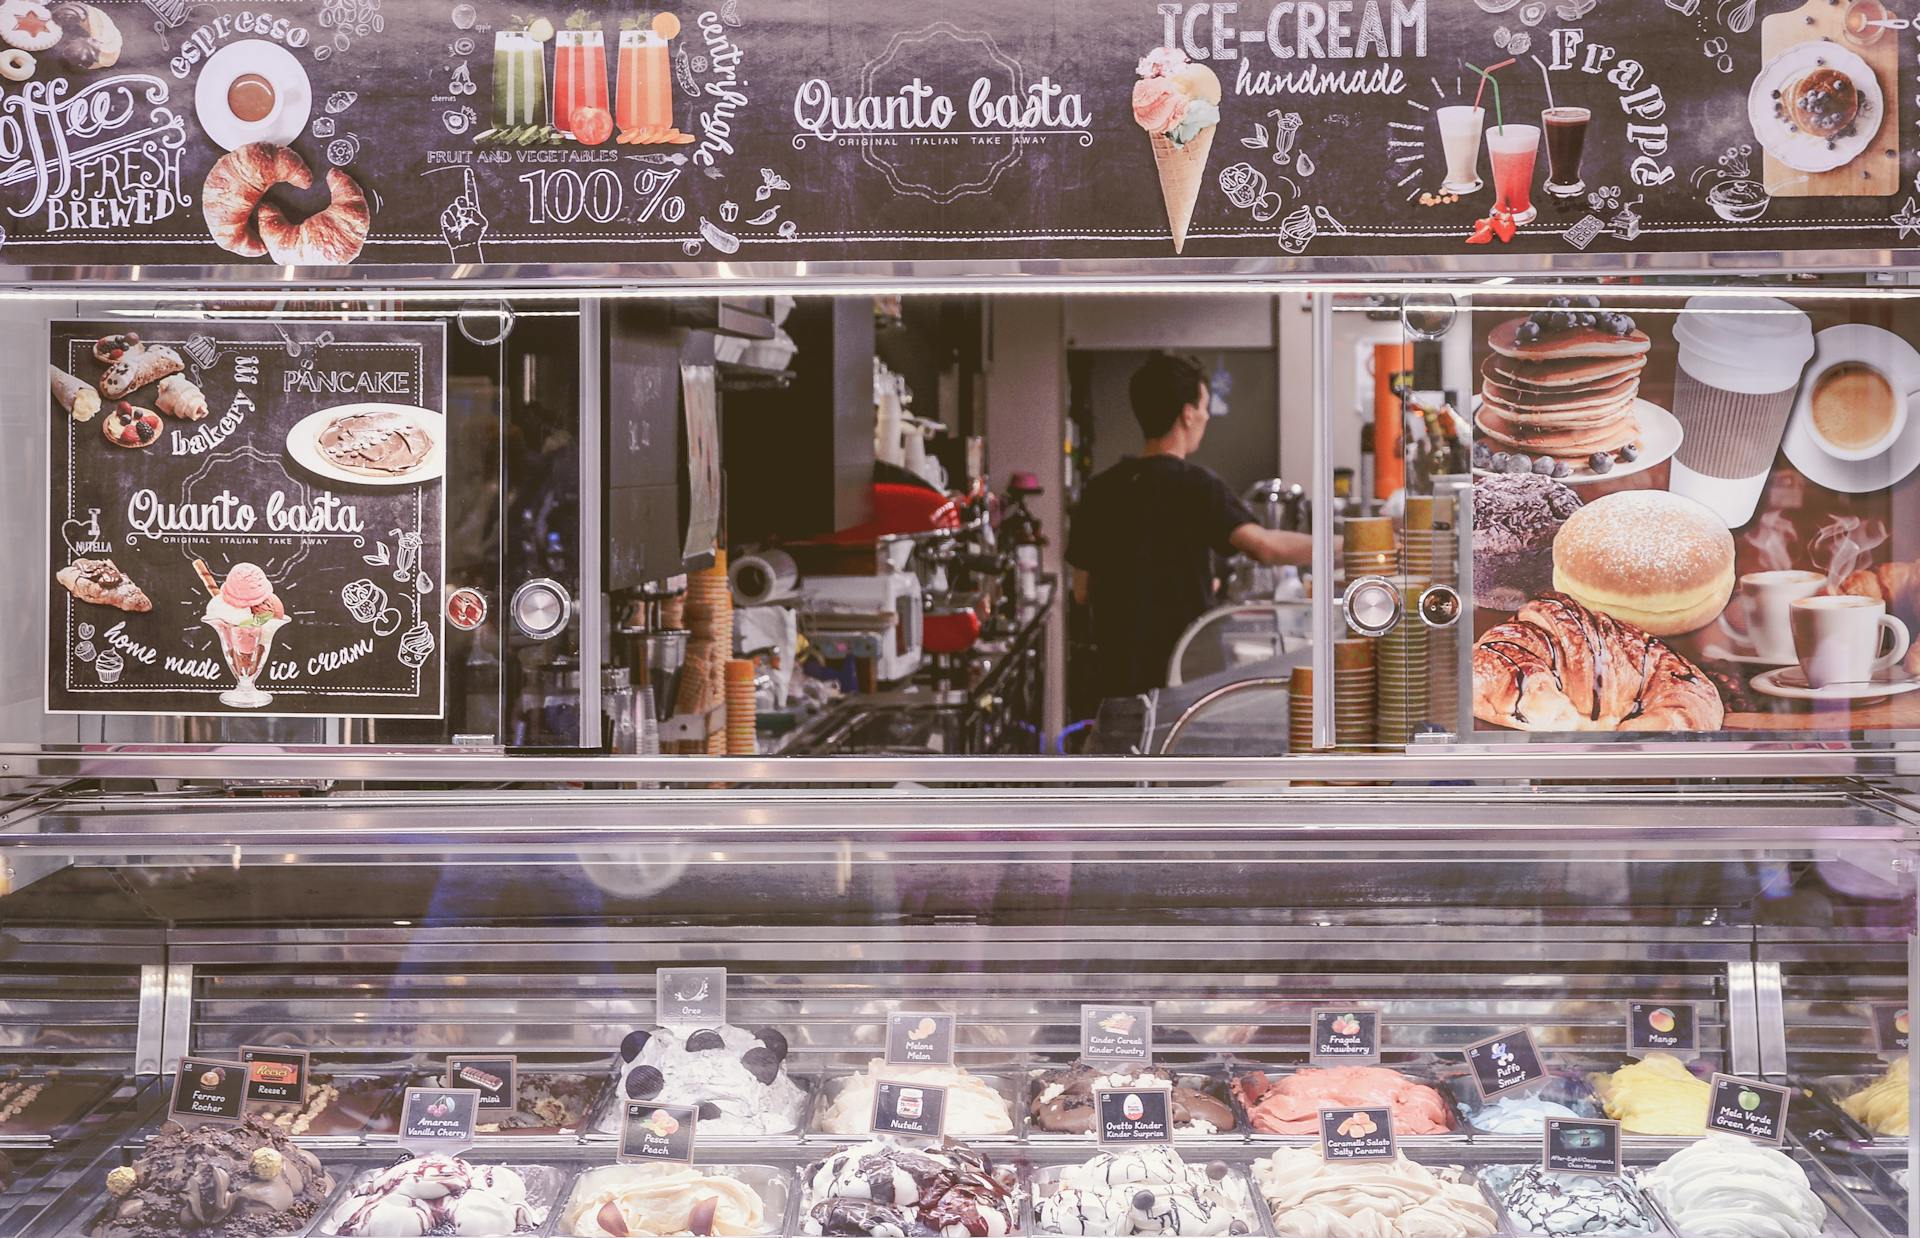 An ice cream shop | Source: Pexels